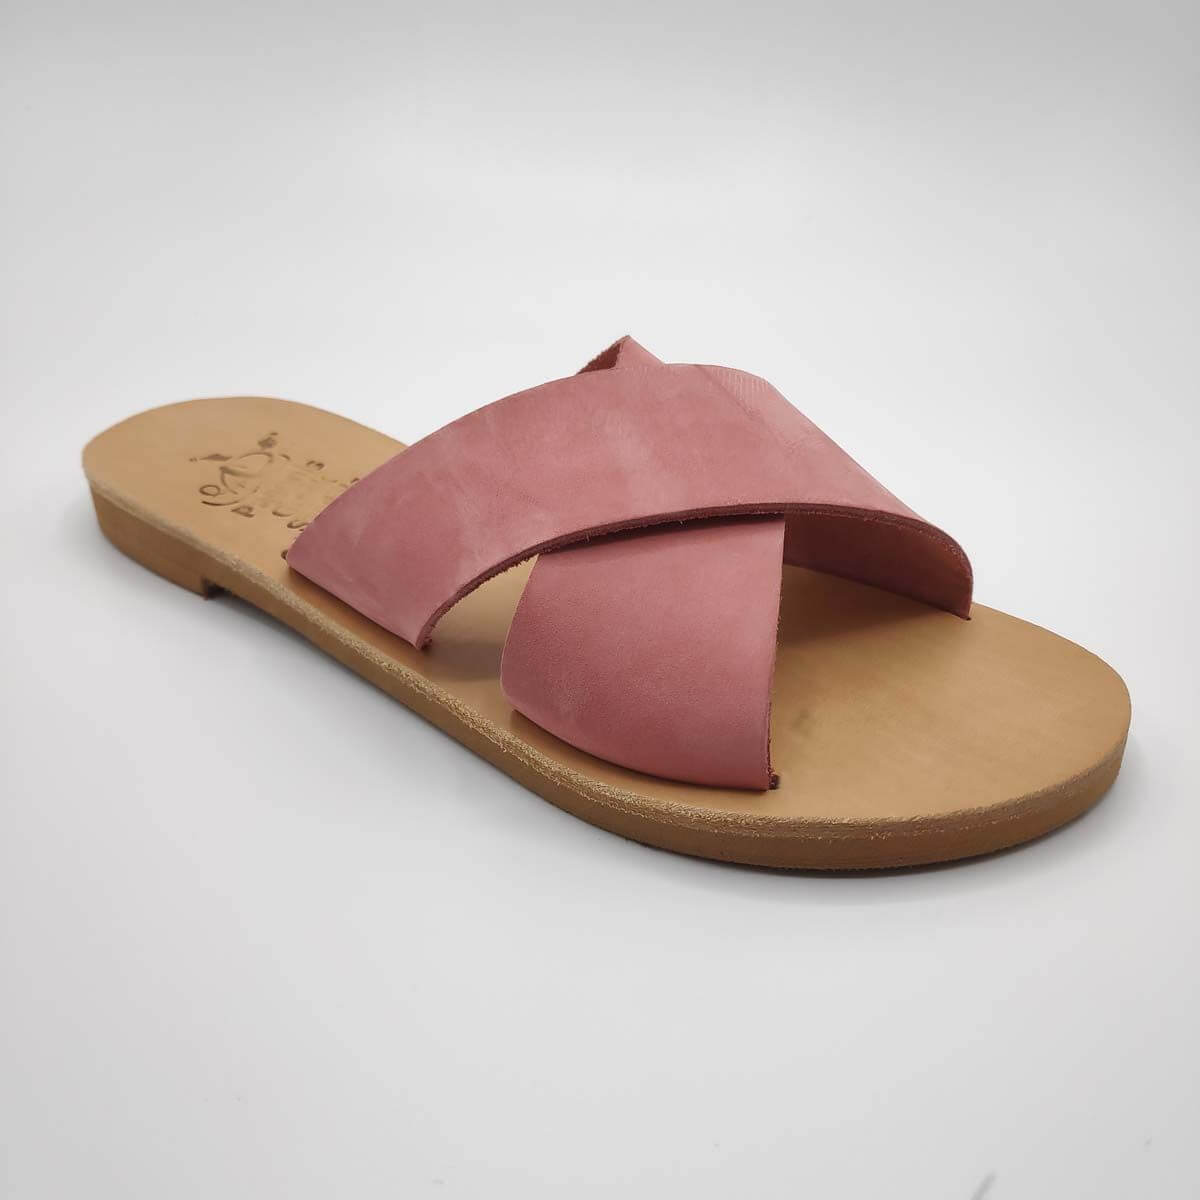 Xi criss cross sandals | Pagonis Greek Sandals